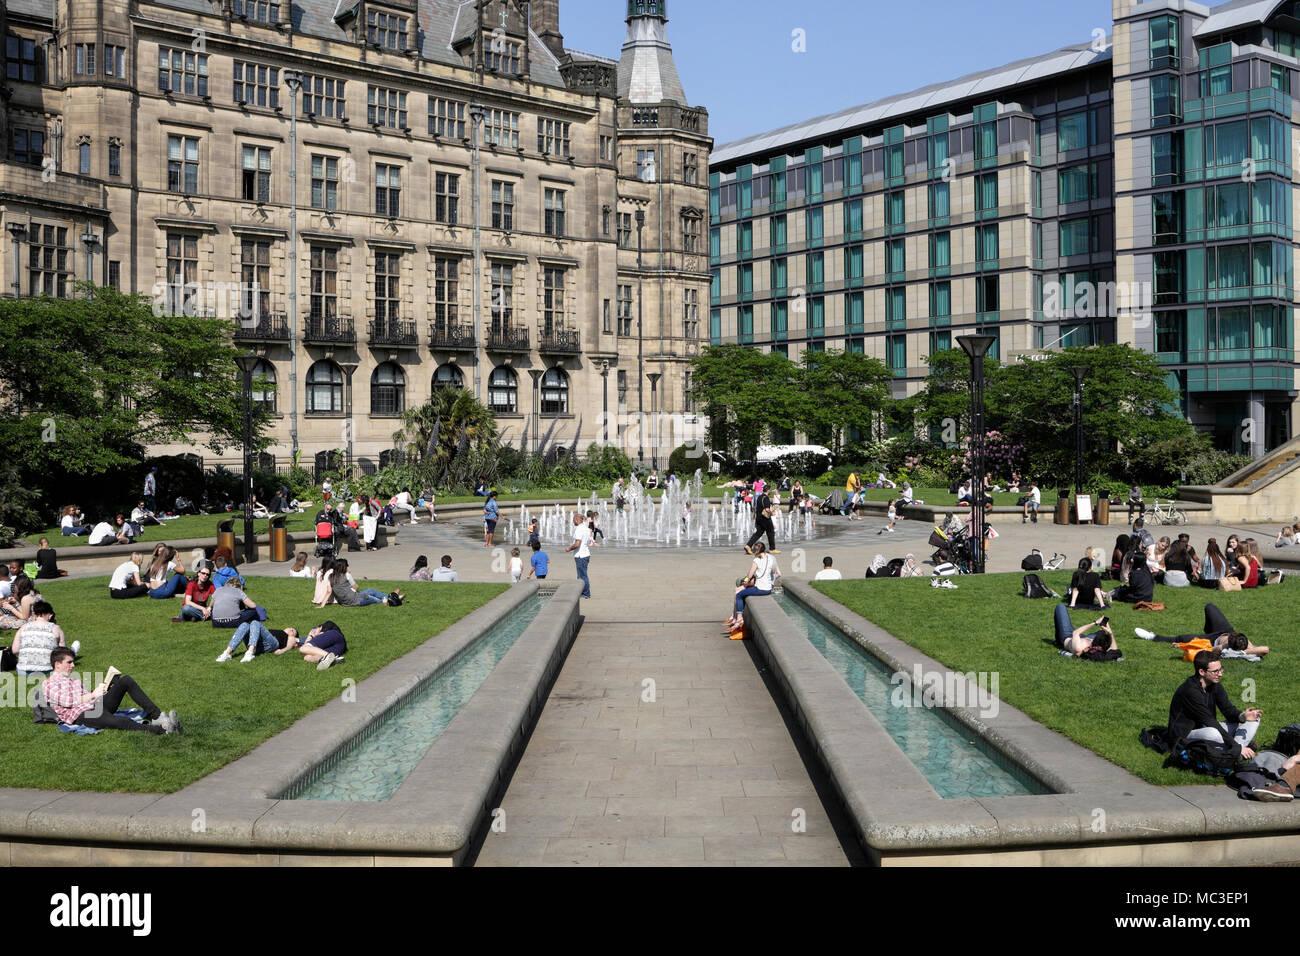 Sheffield Peace gardens public space in Sheffield city centre England UK, crowds enjoying the sun Stock Photo